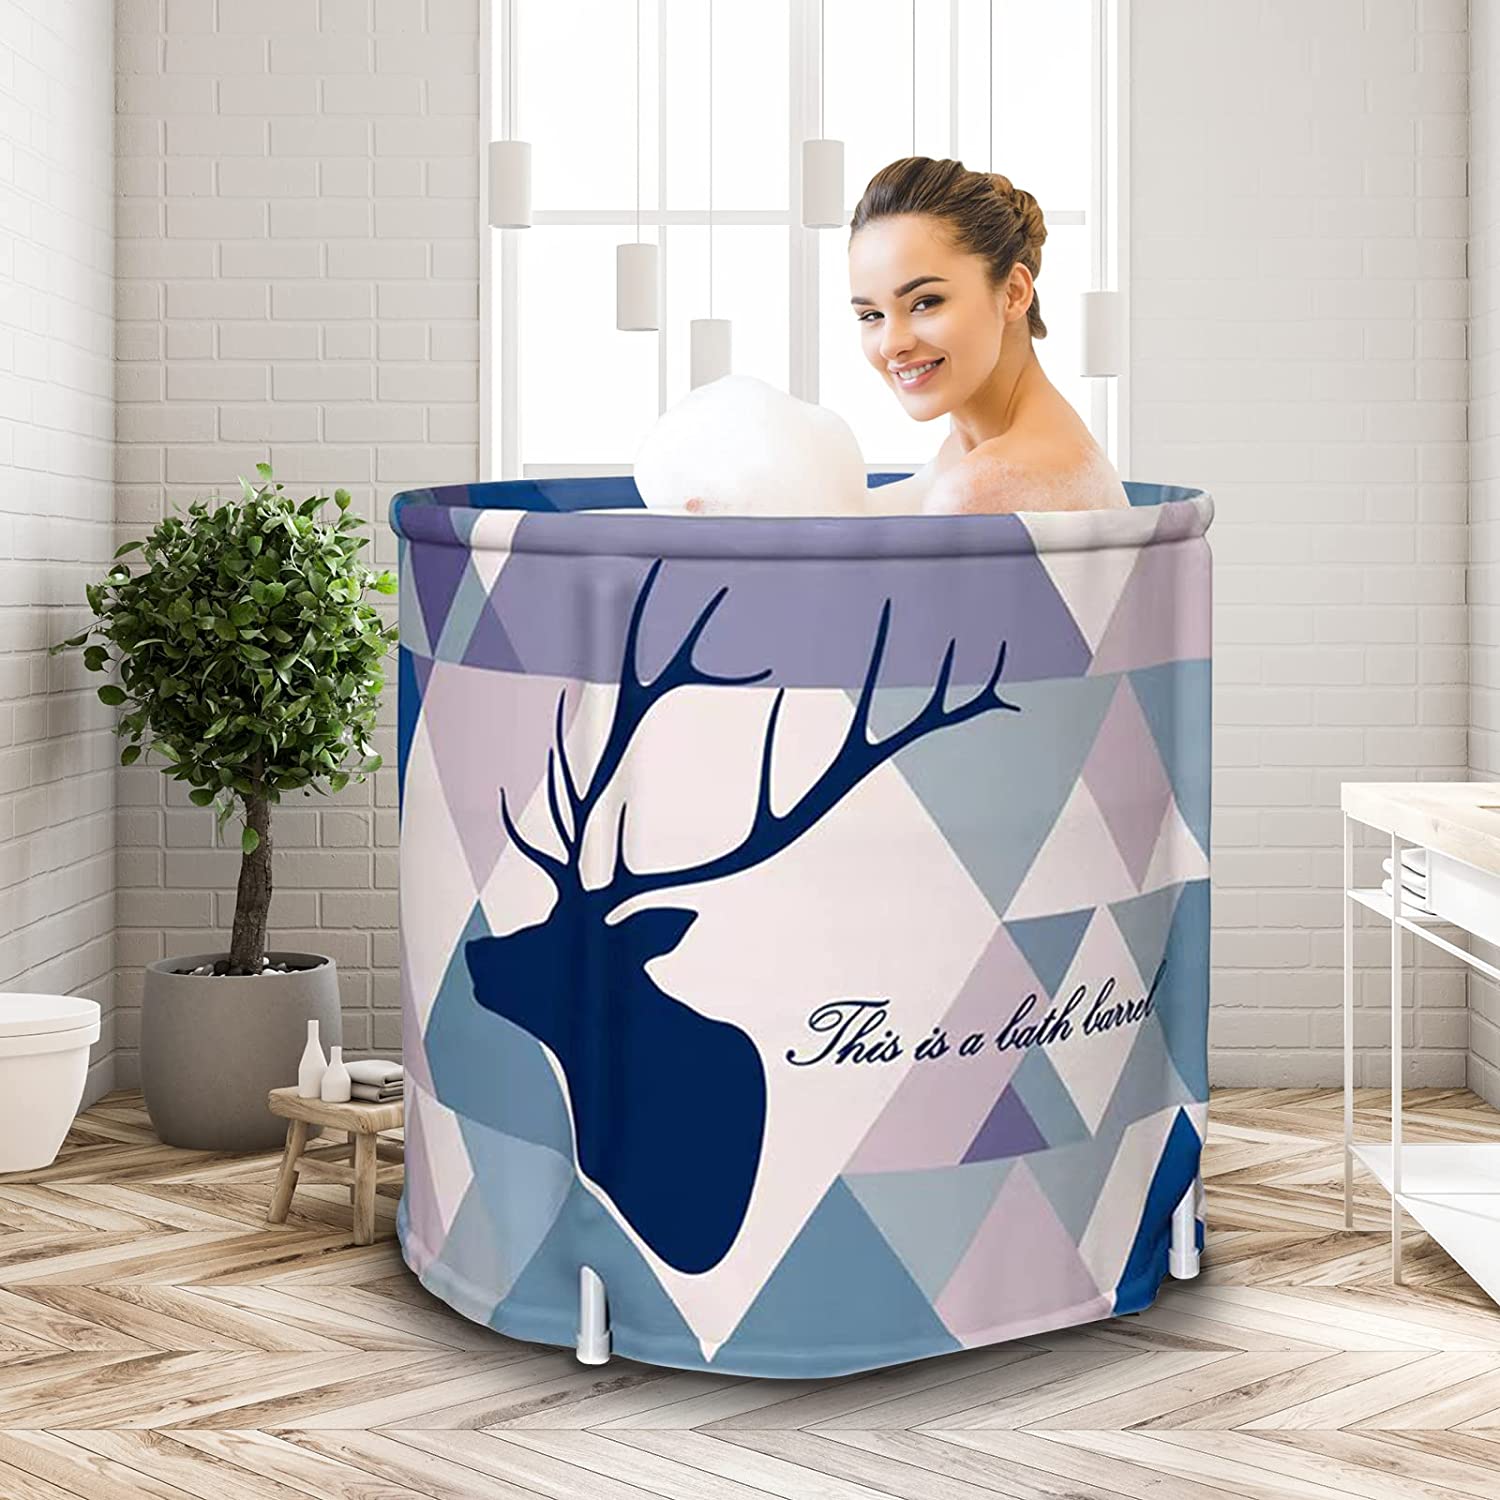 Portable Foldable Bathtub Kit I Soaking Hot Bathtub for Adults I Bathroom SPA Tub I Ice Bathtub I 25.6 x 21.6 x 25.6 inches